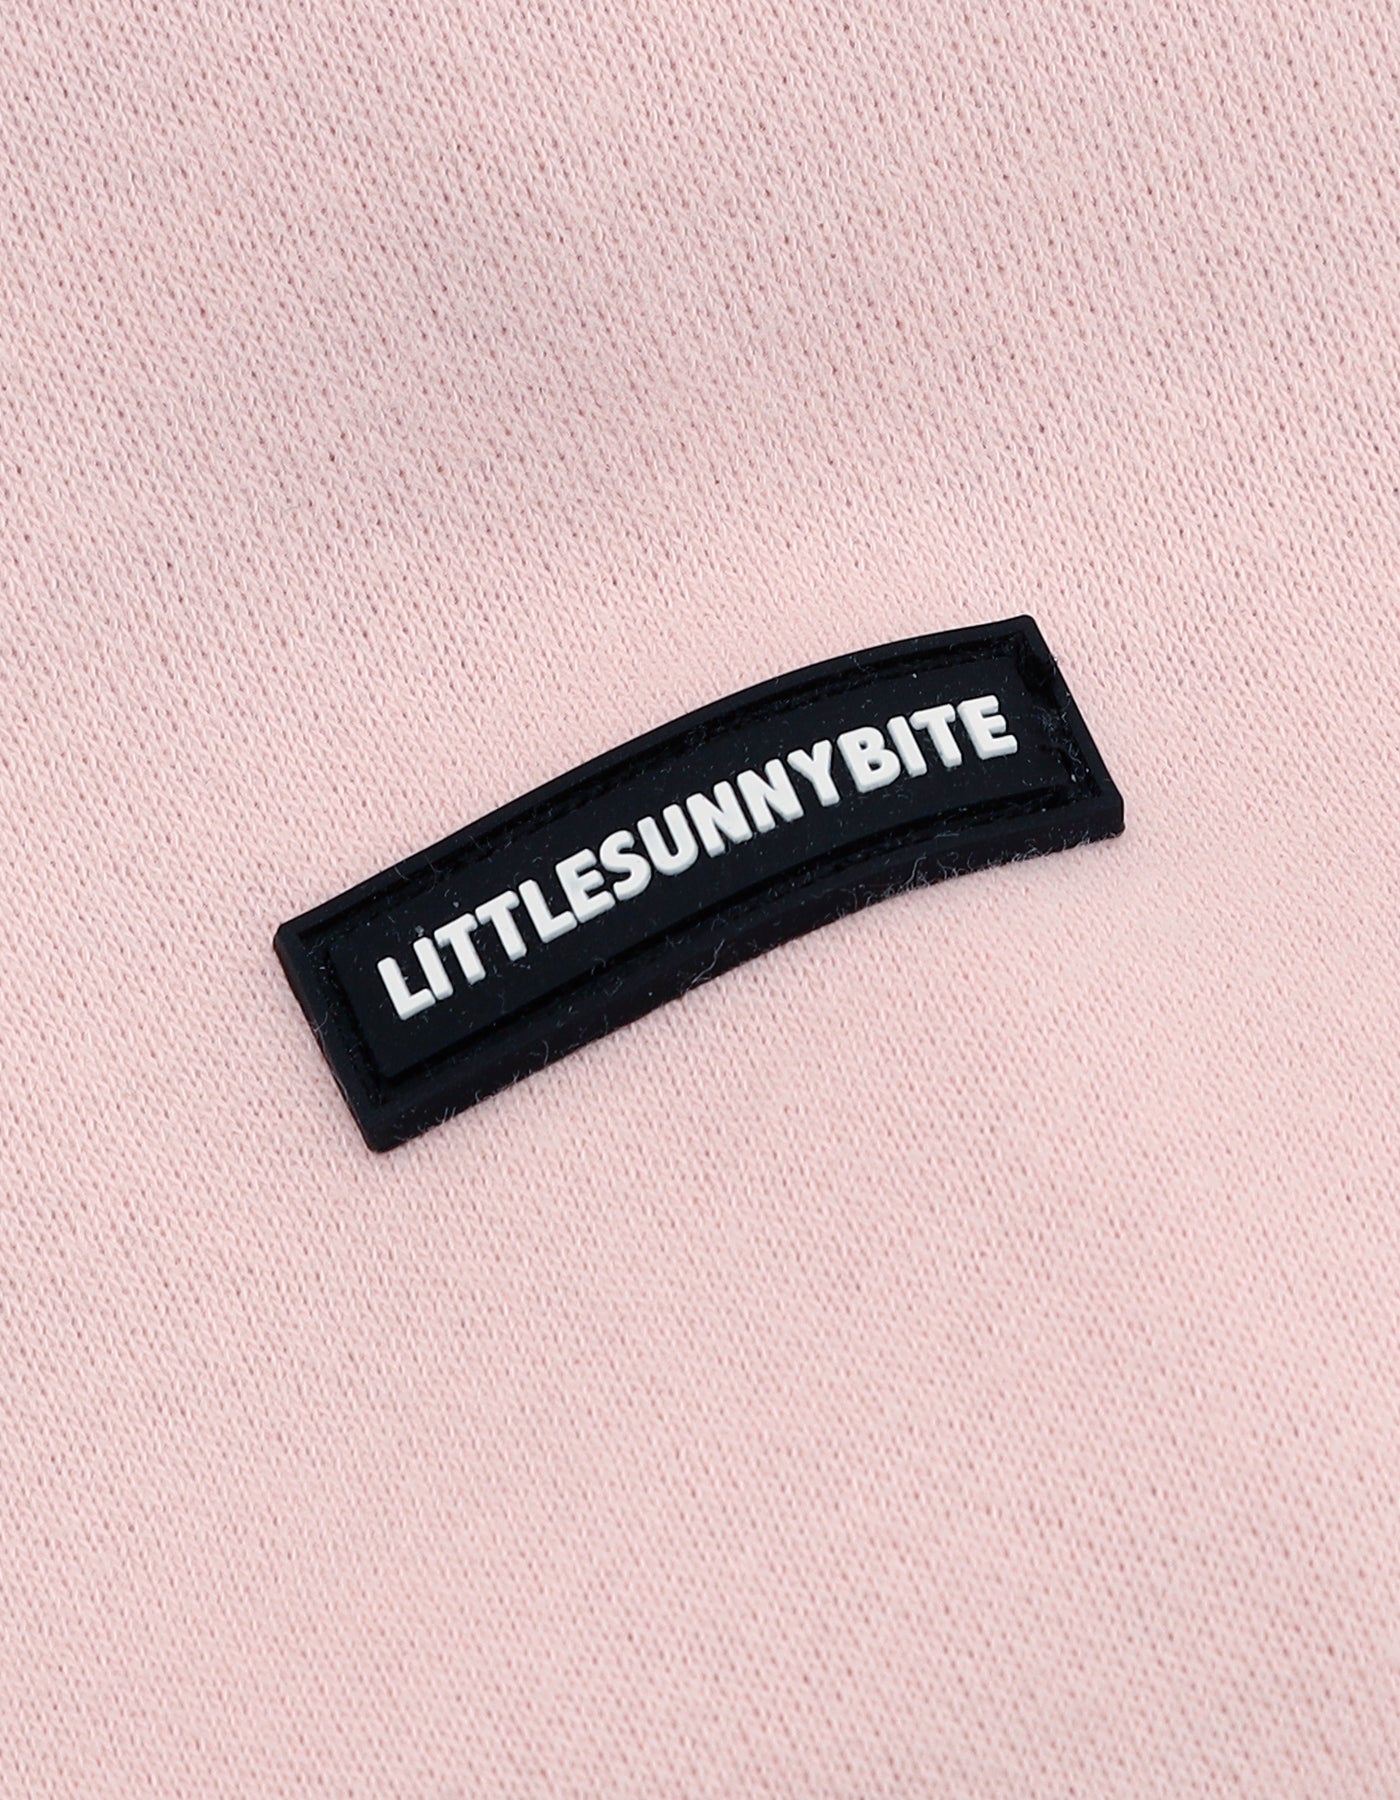 little sunny bite fake layered sweat crew / PINK